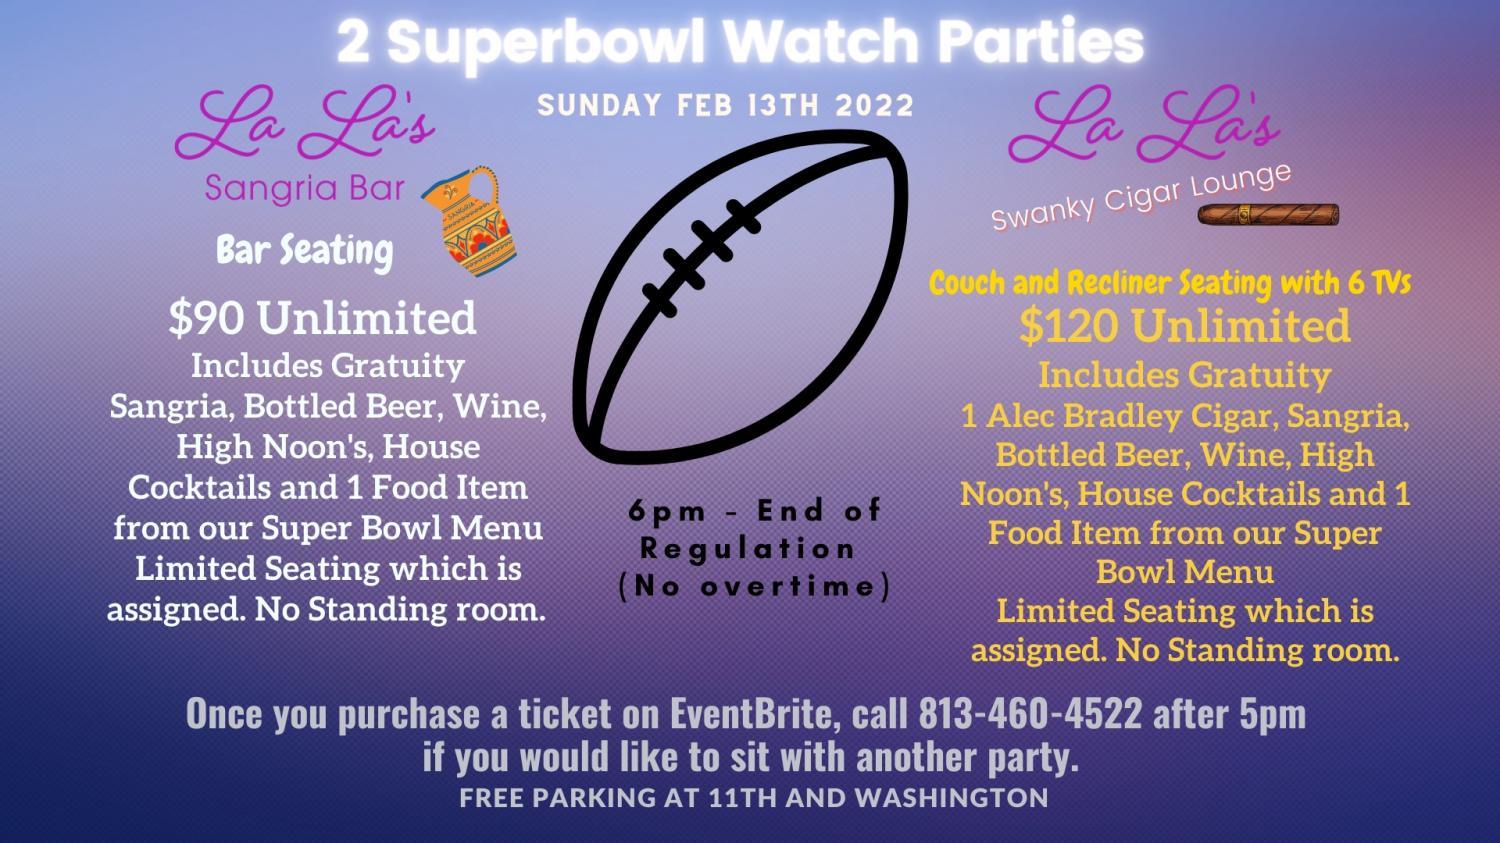 Super Bowl Watch Parties